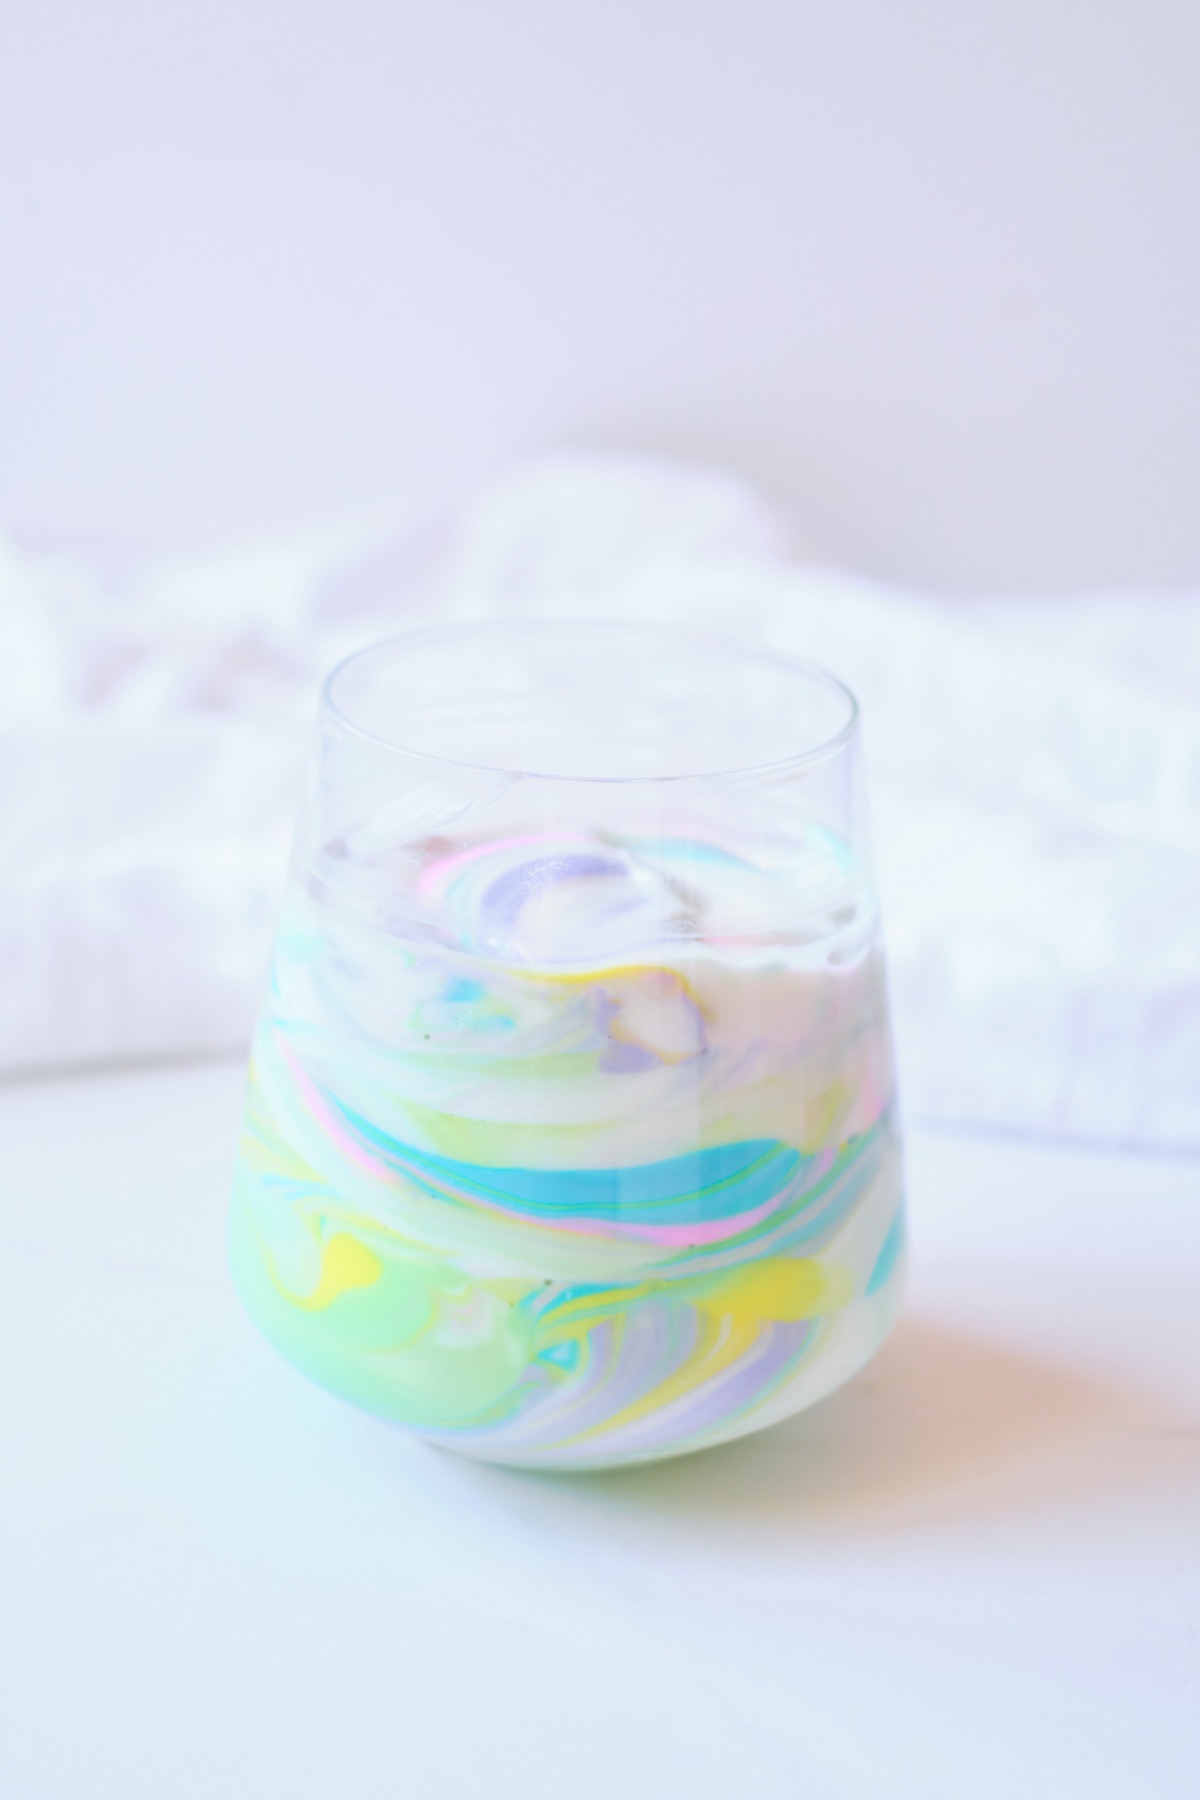 finished unicorn yogurt recipe in a glass